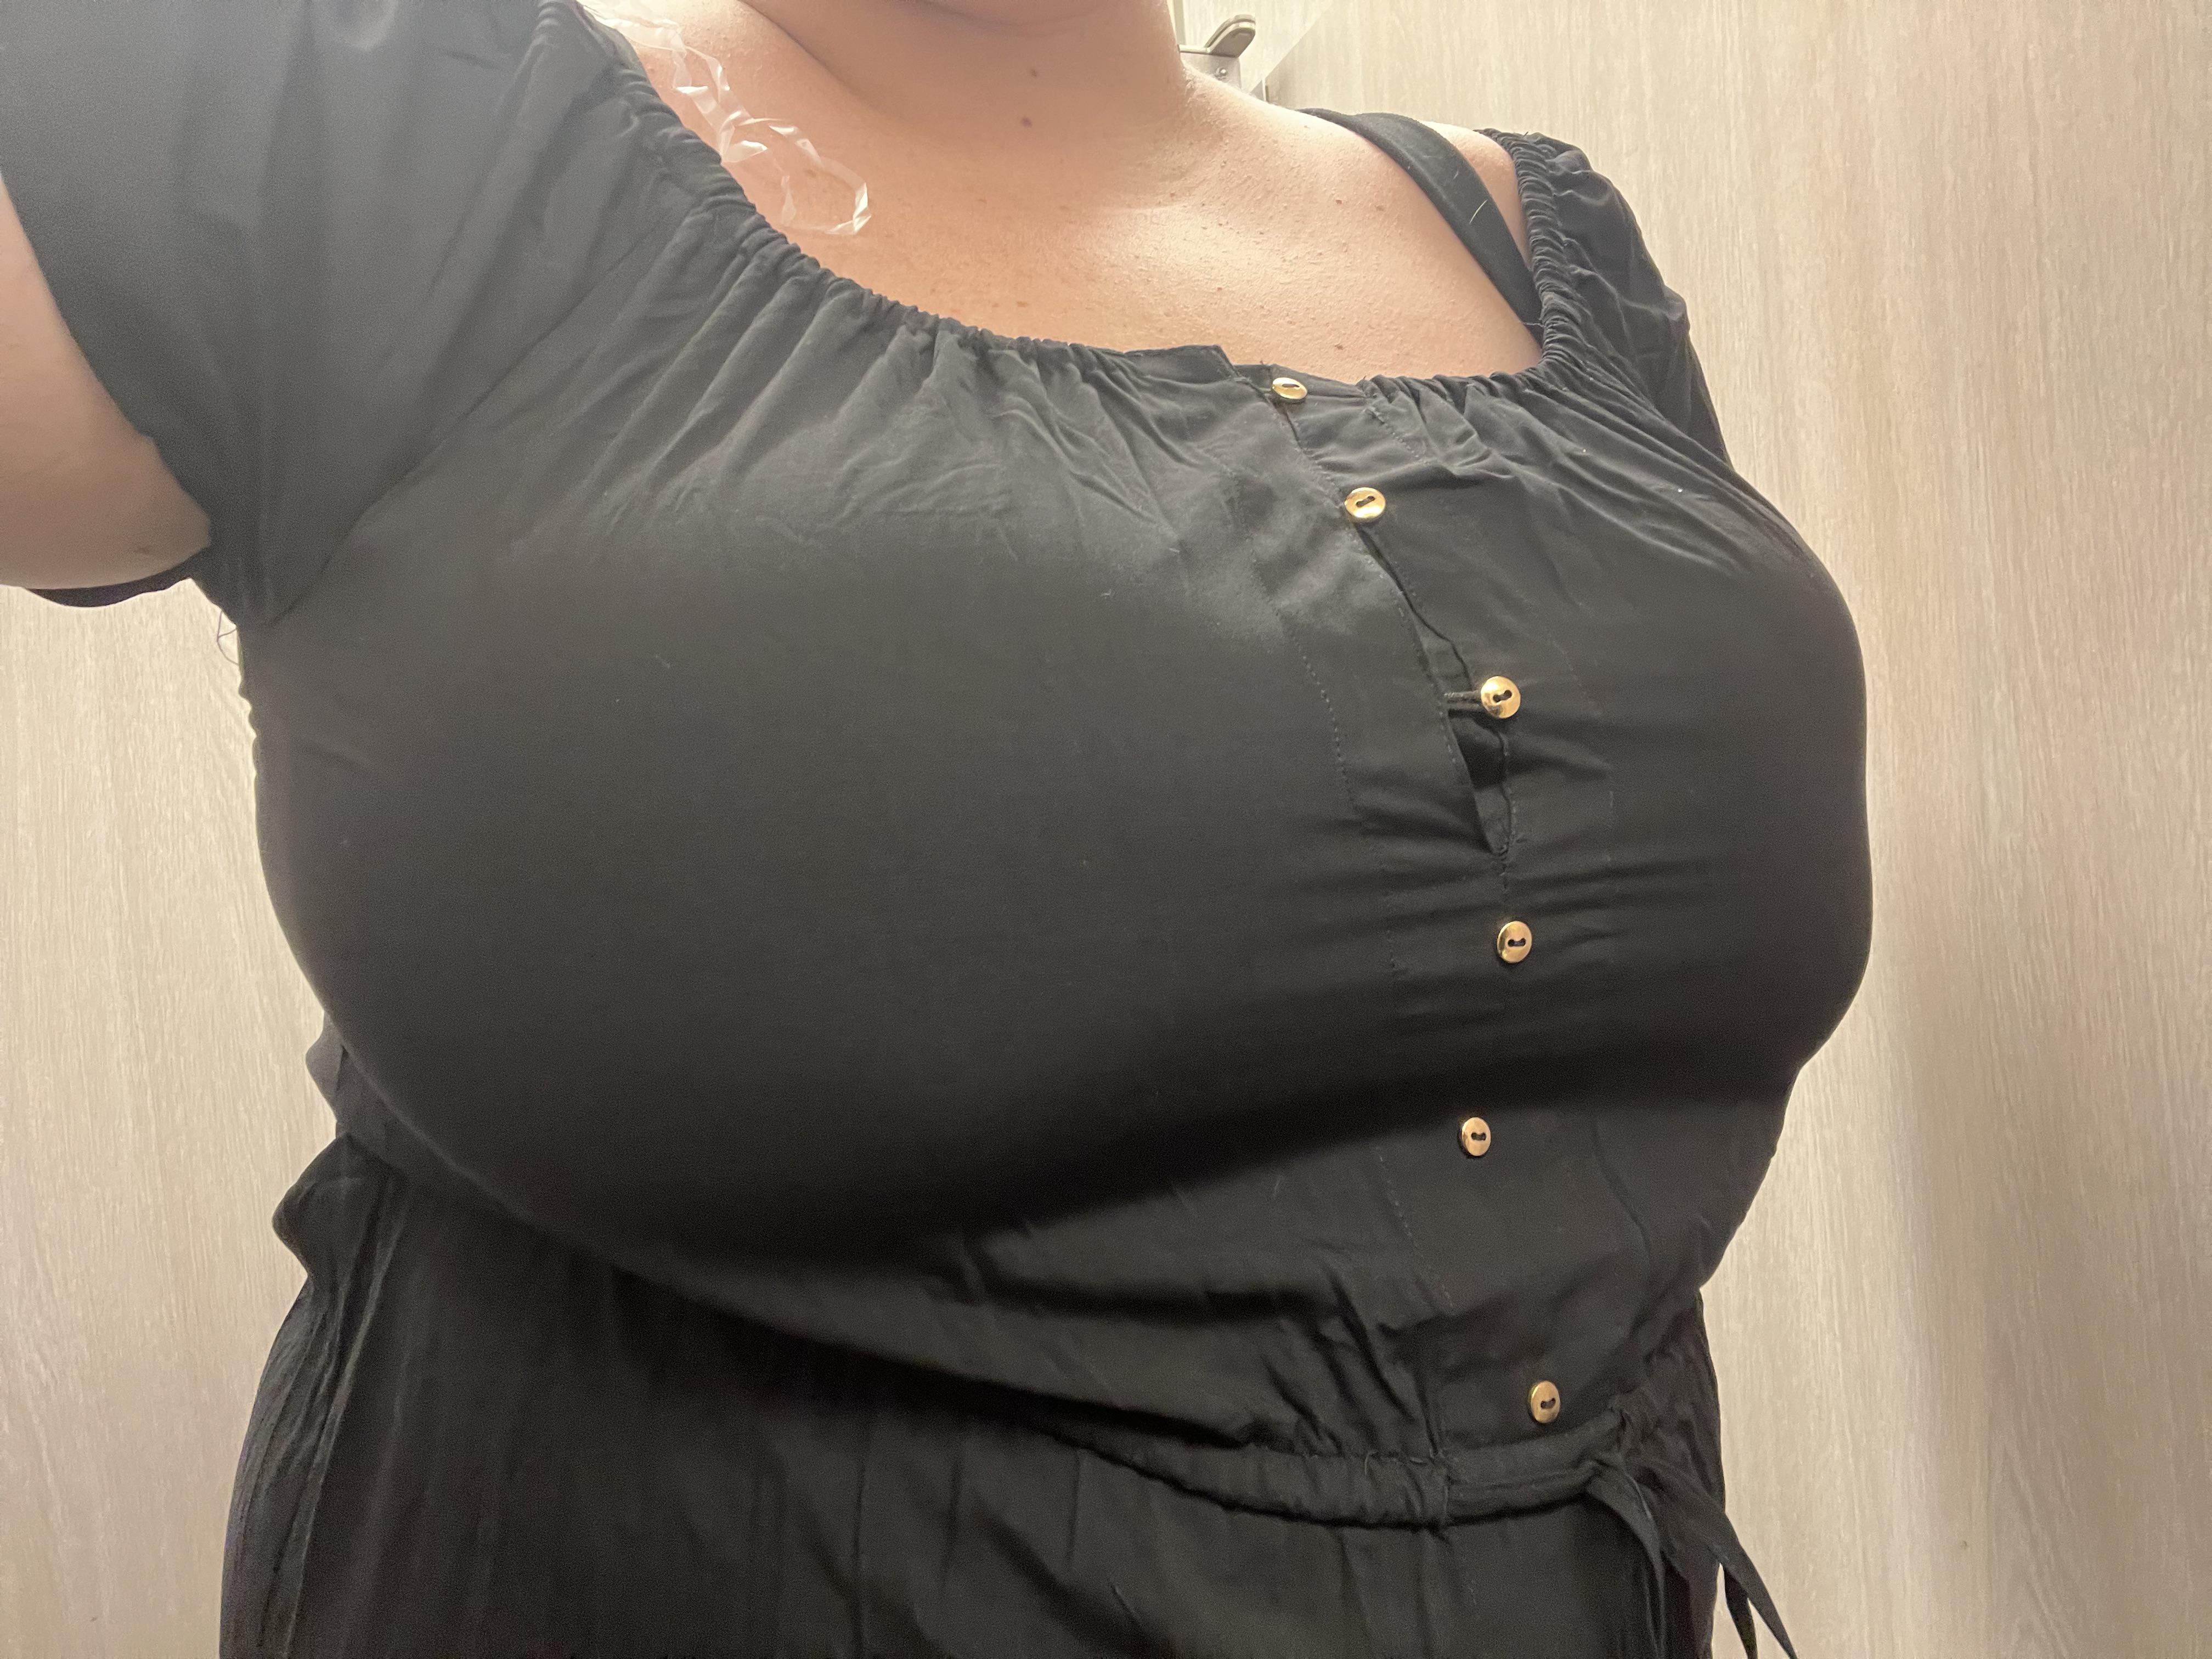 big boobs tight clothing